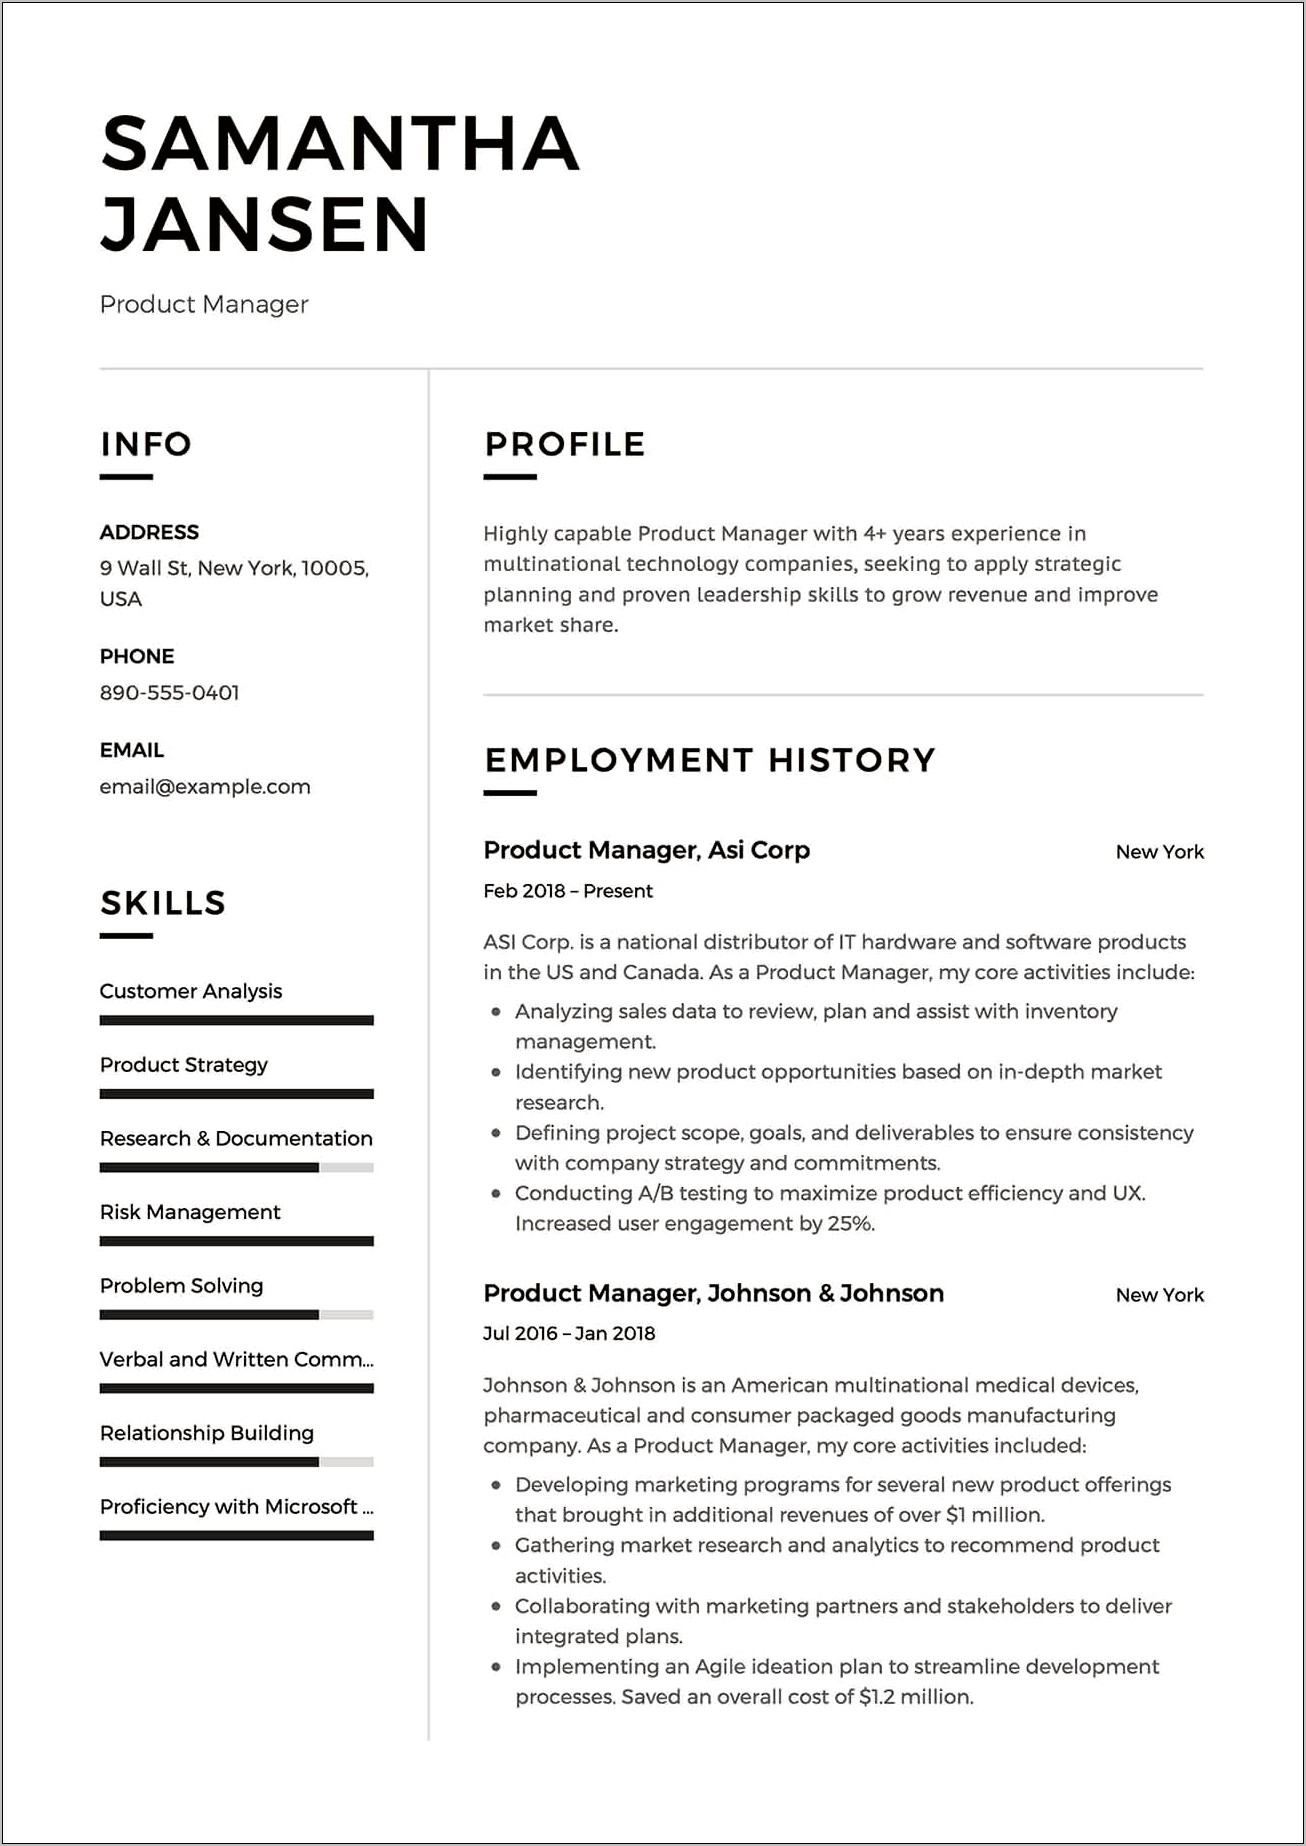 Job History Order On Resume